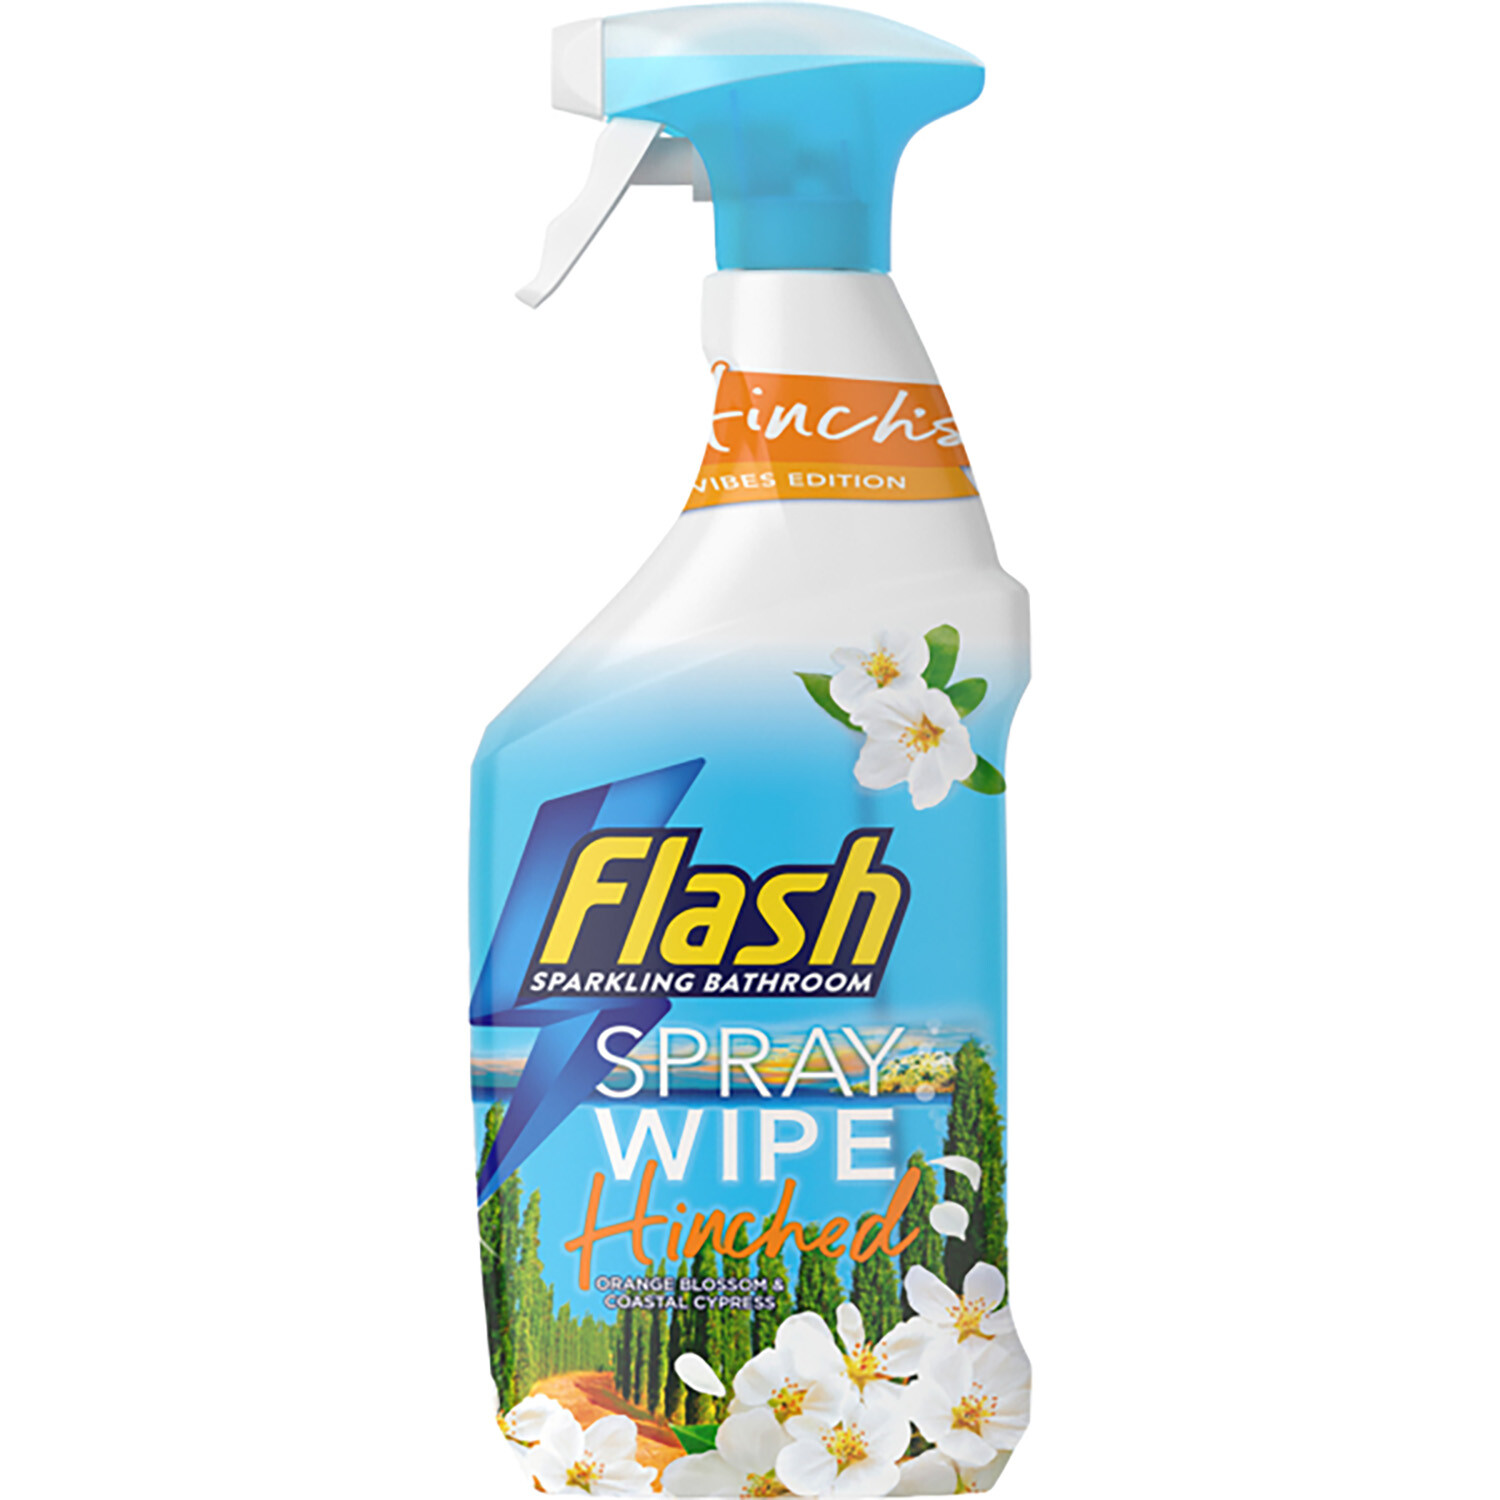 Flash Spray Wipe Done - Orange Blossom and Coastal Cypress Image